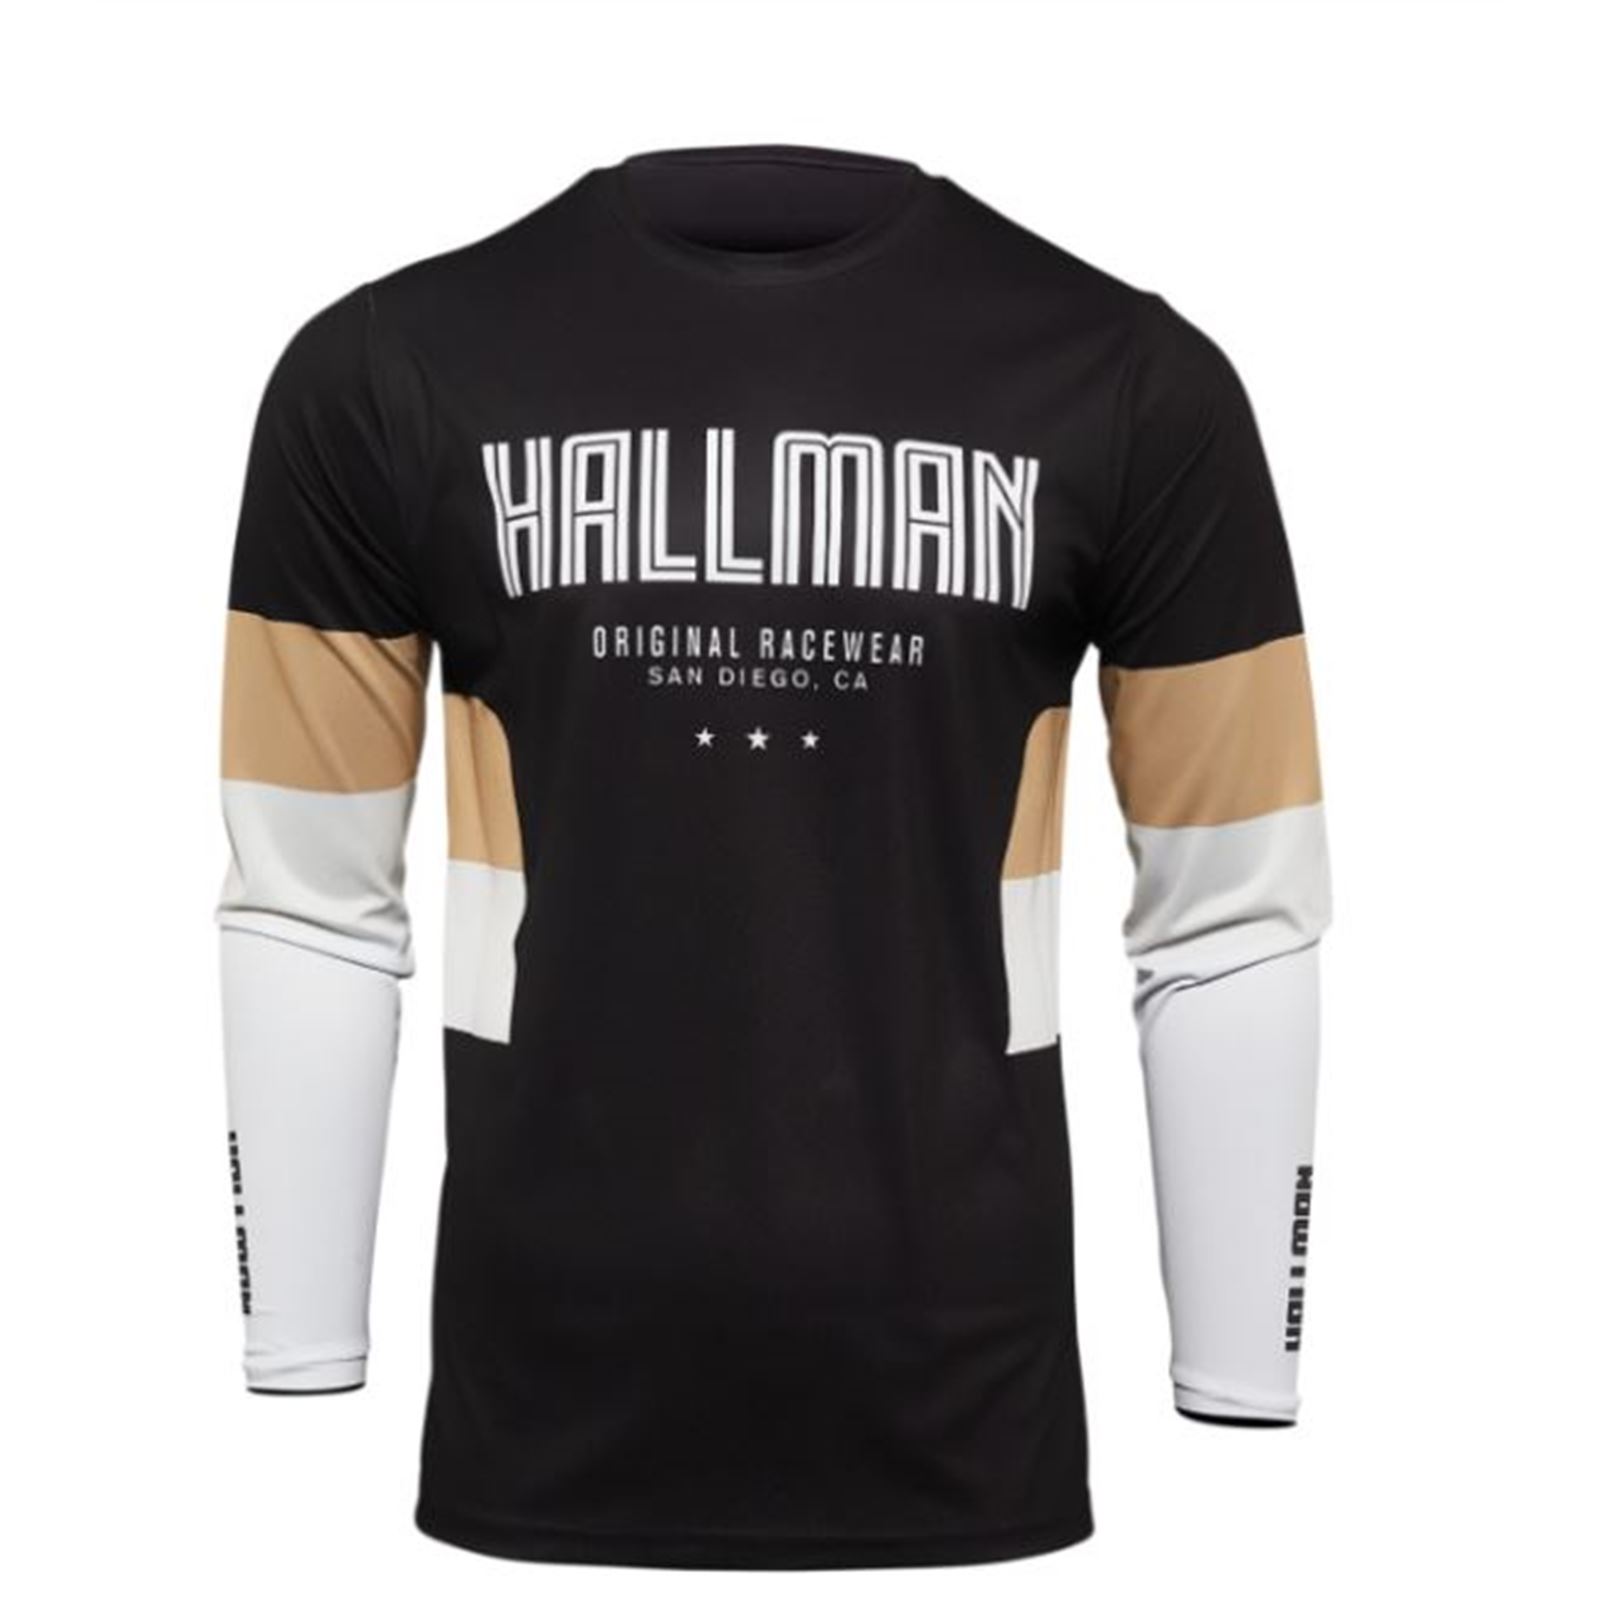 Thor Hallman Different Drift Jersey - Black/Light Tan - Medium